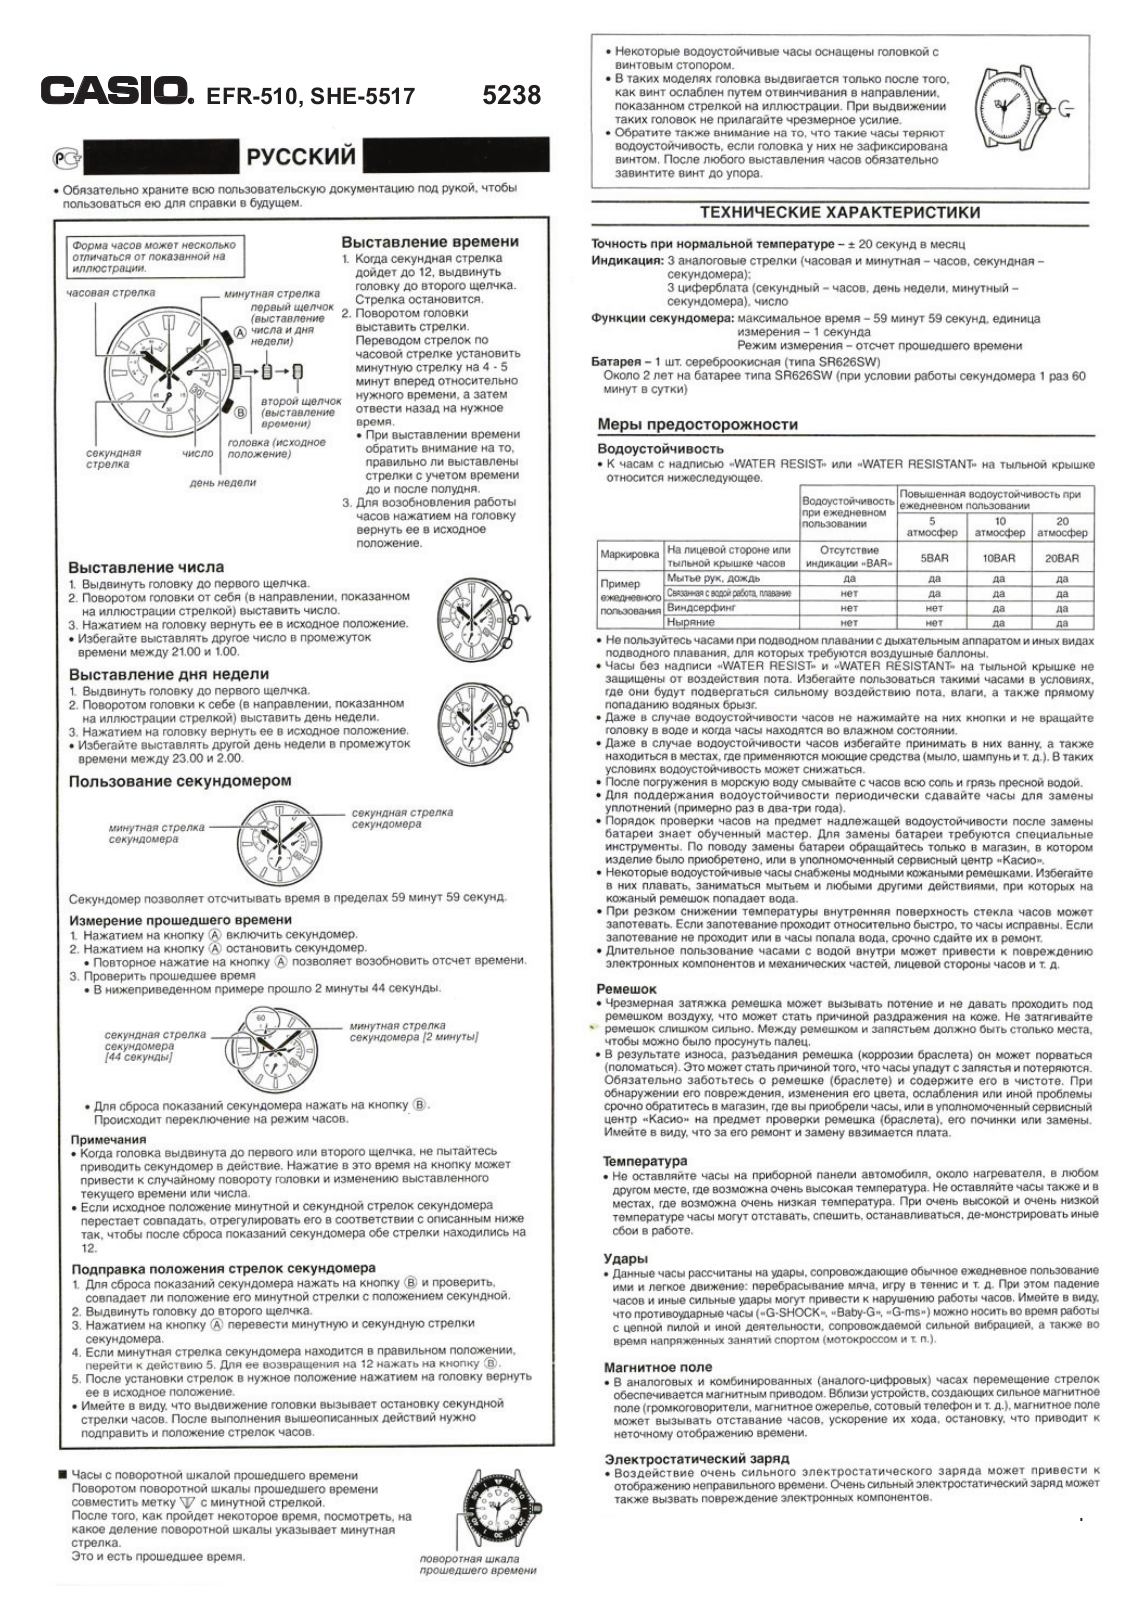 Casio EFR-510D-1A User Manual